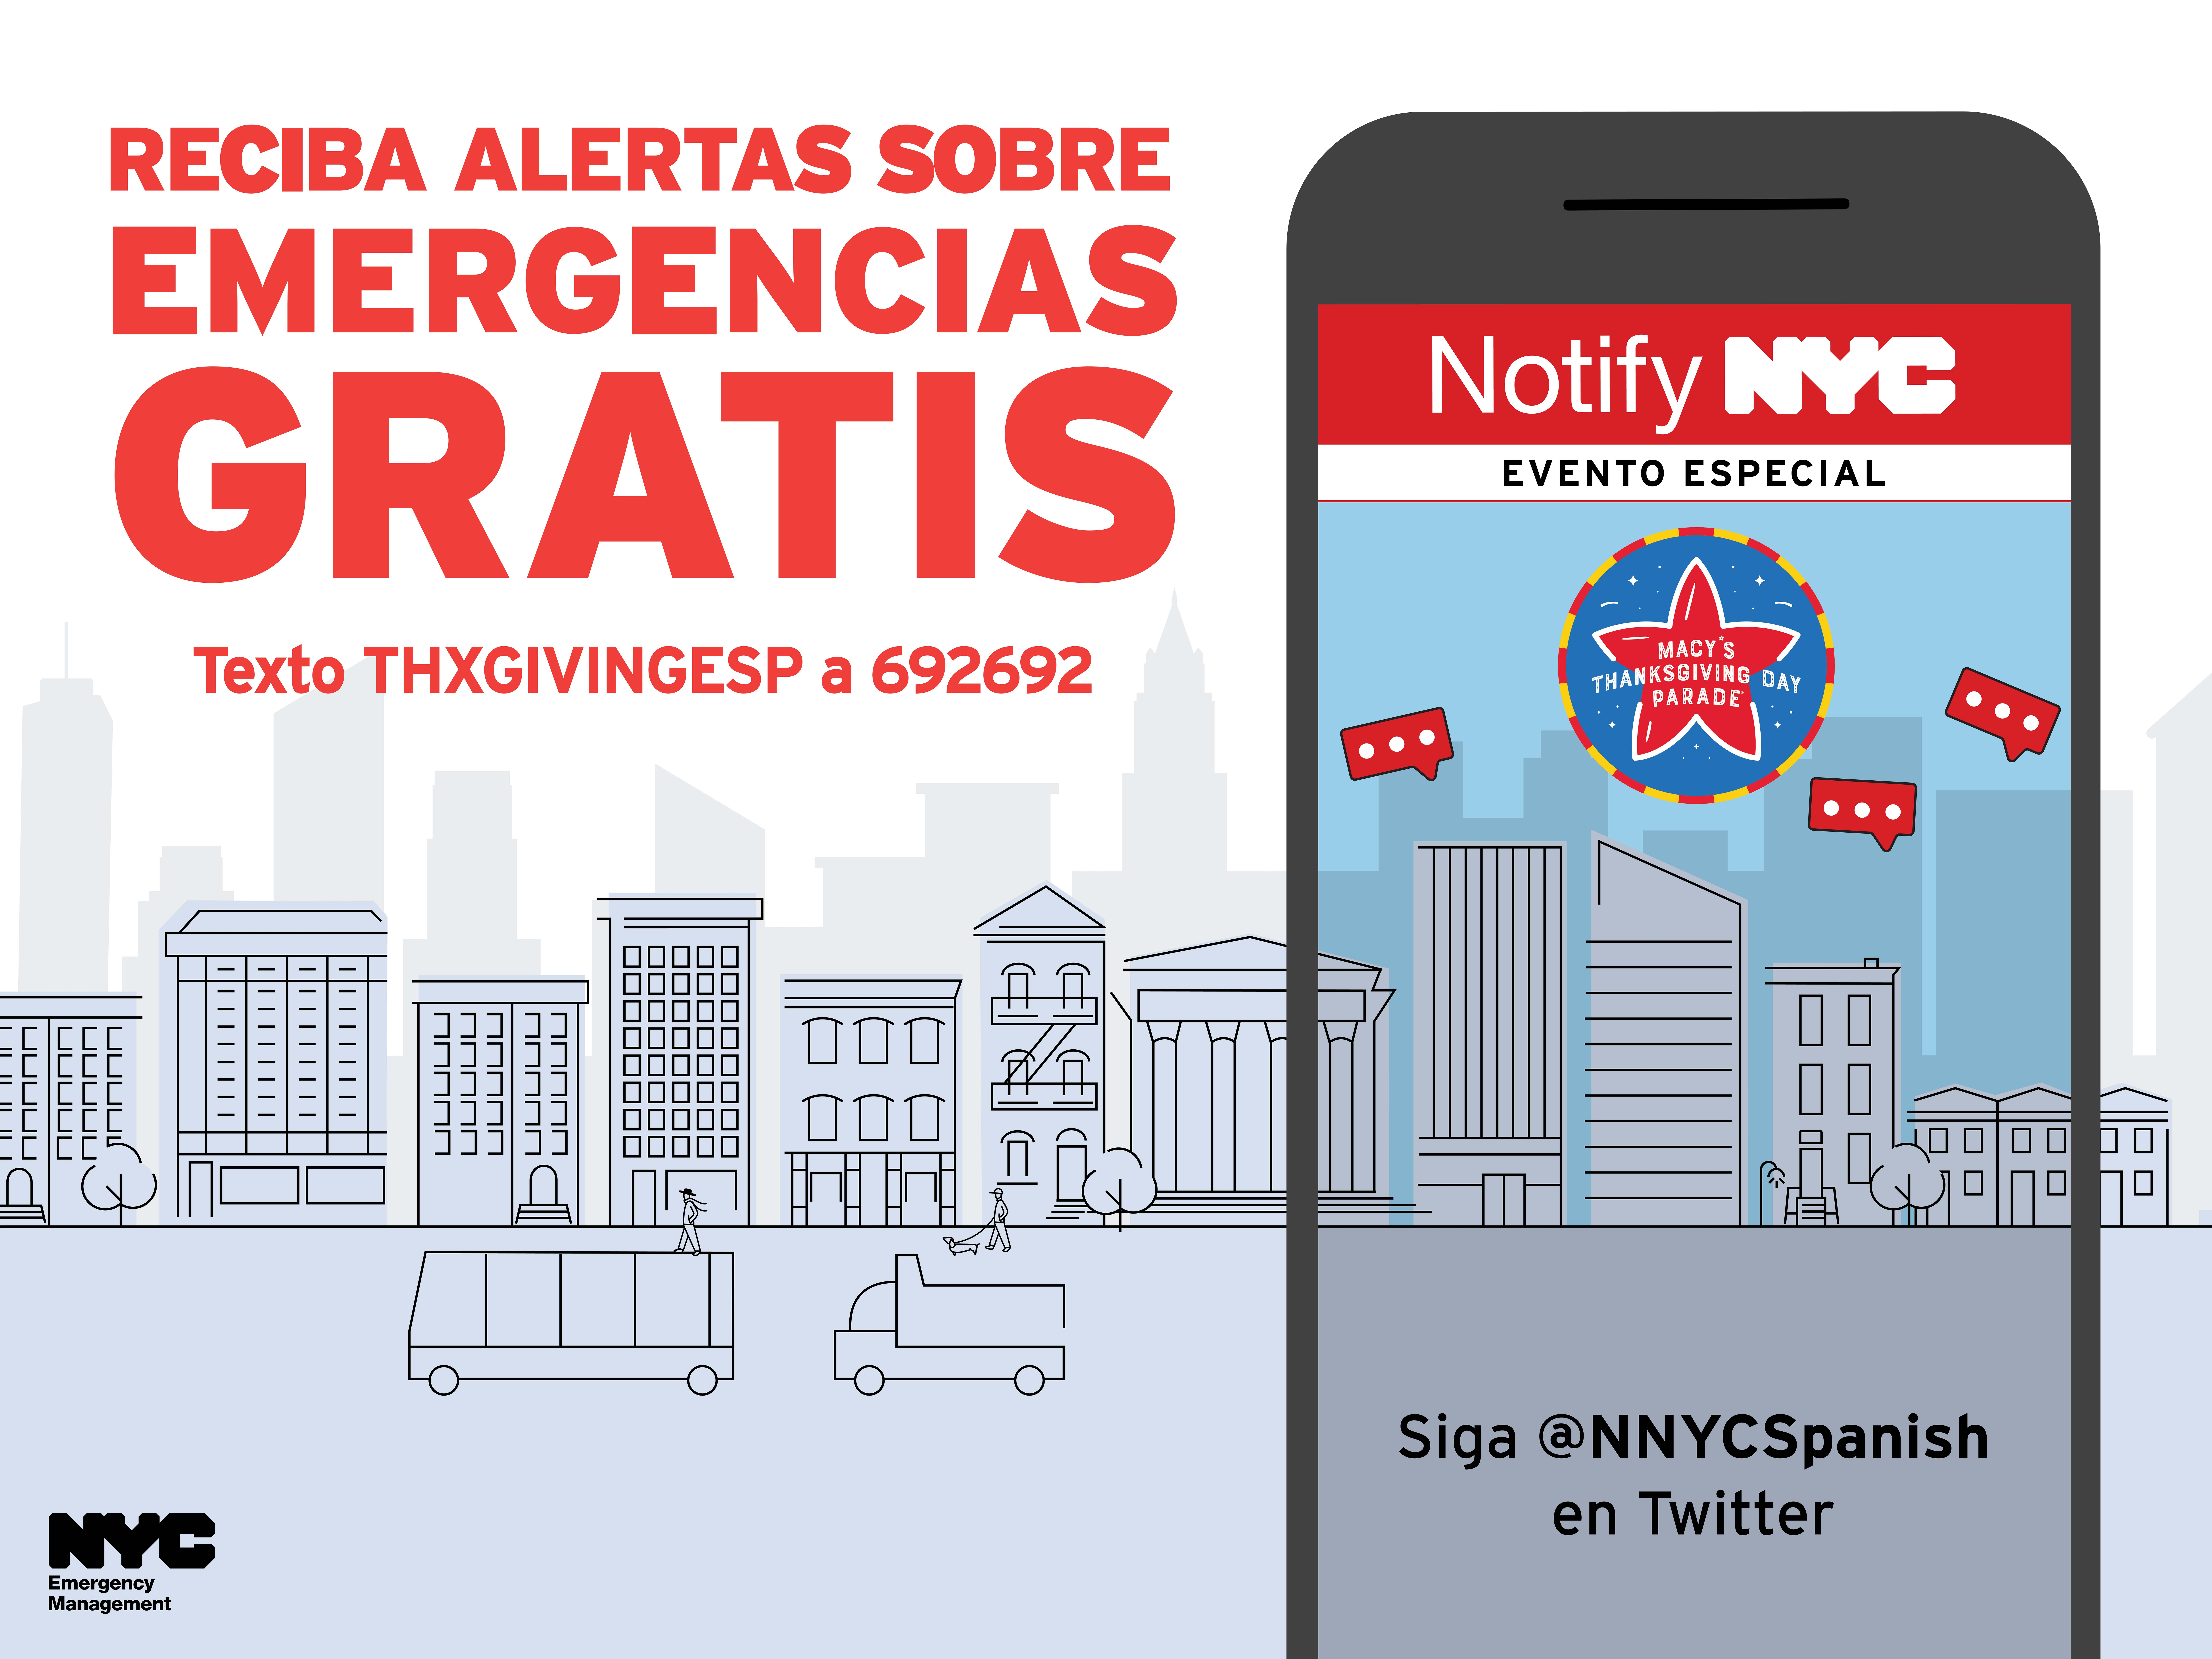 Notify NYC short code graphic in Spanish